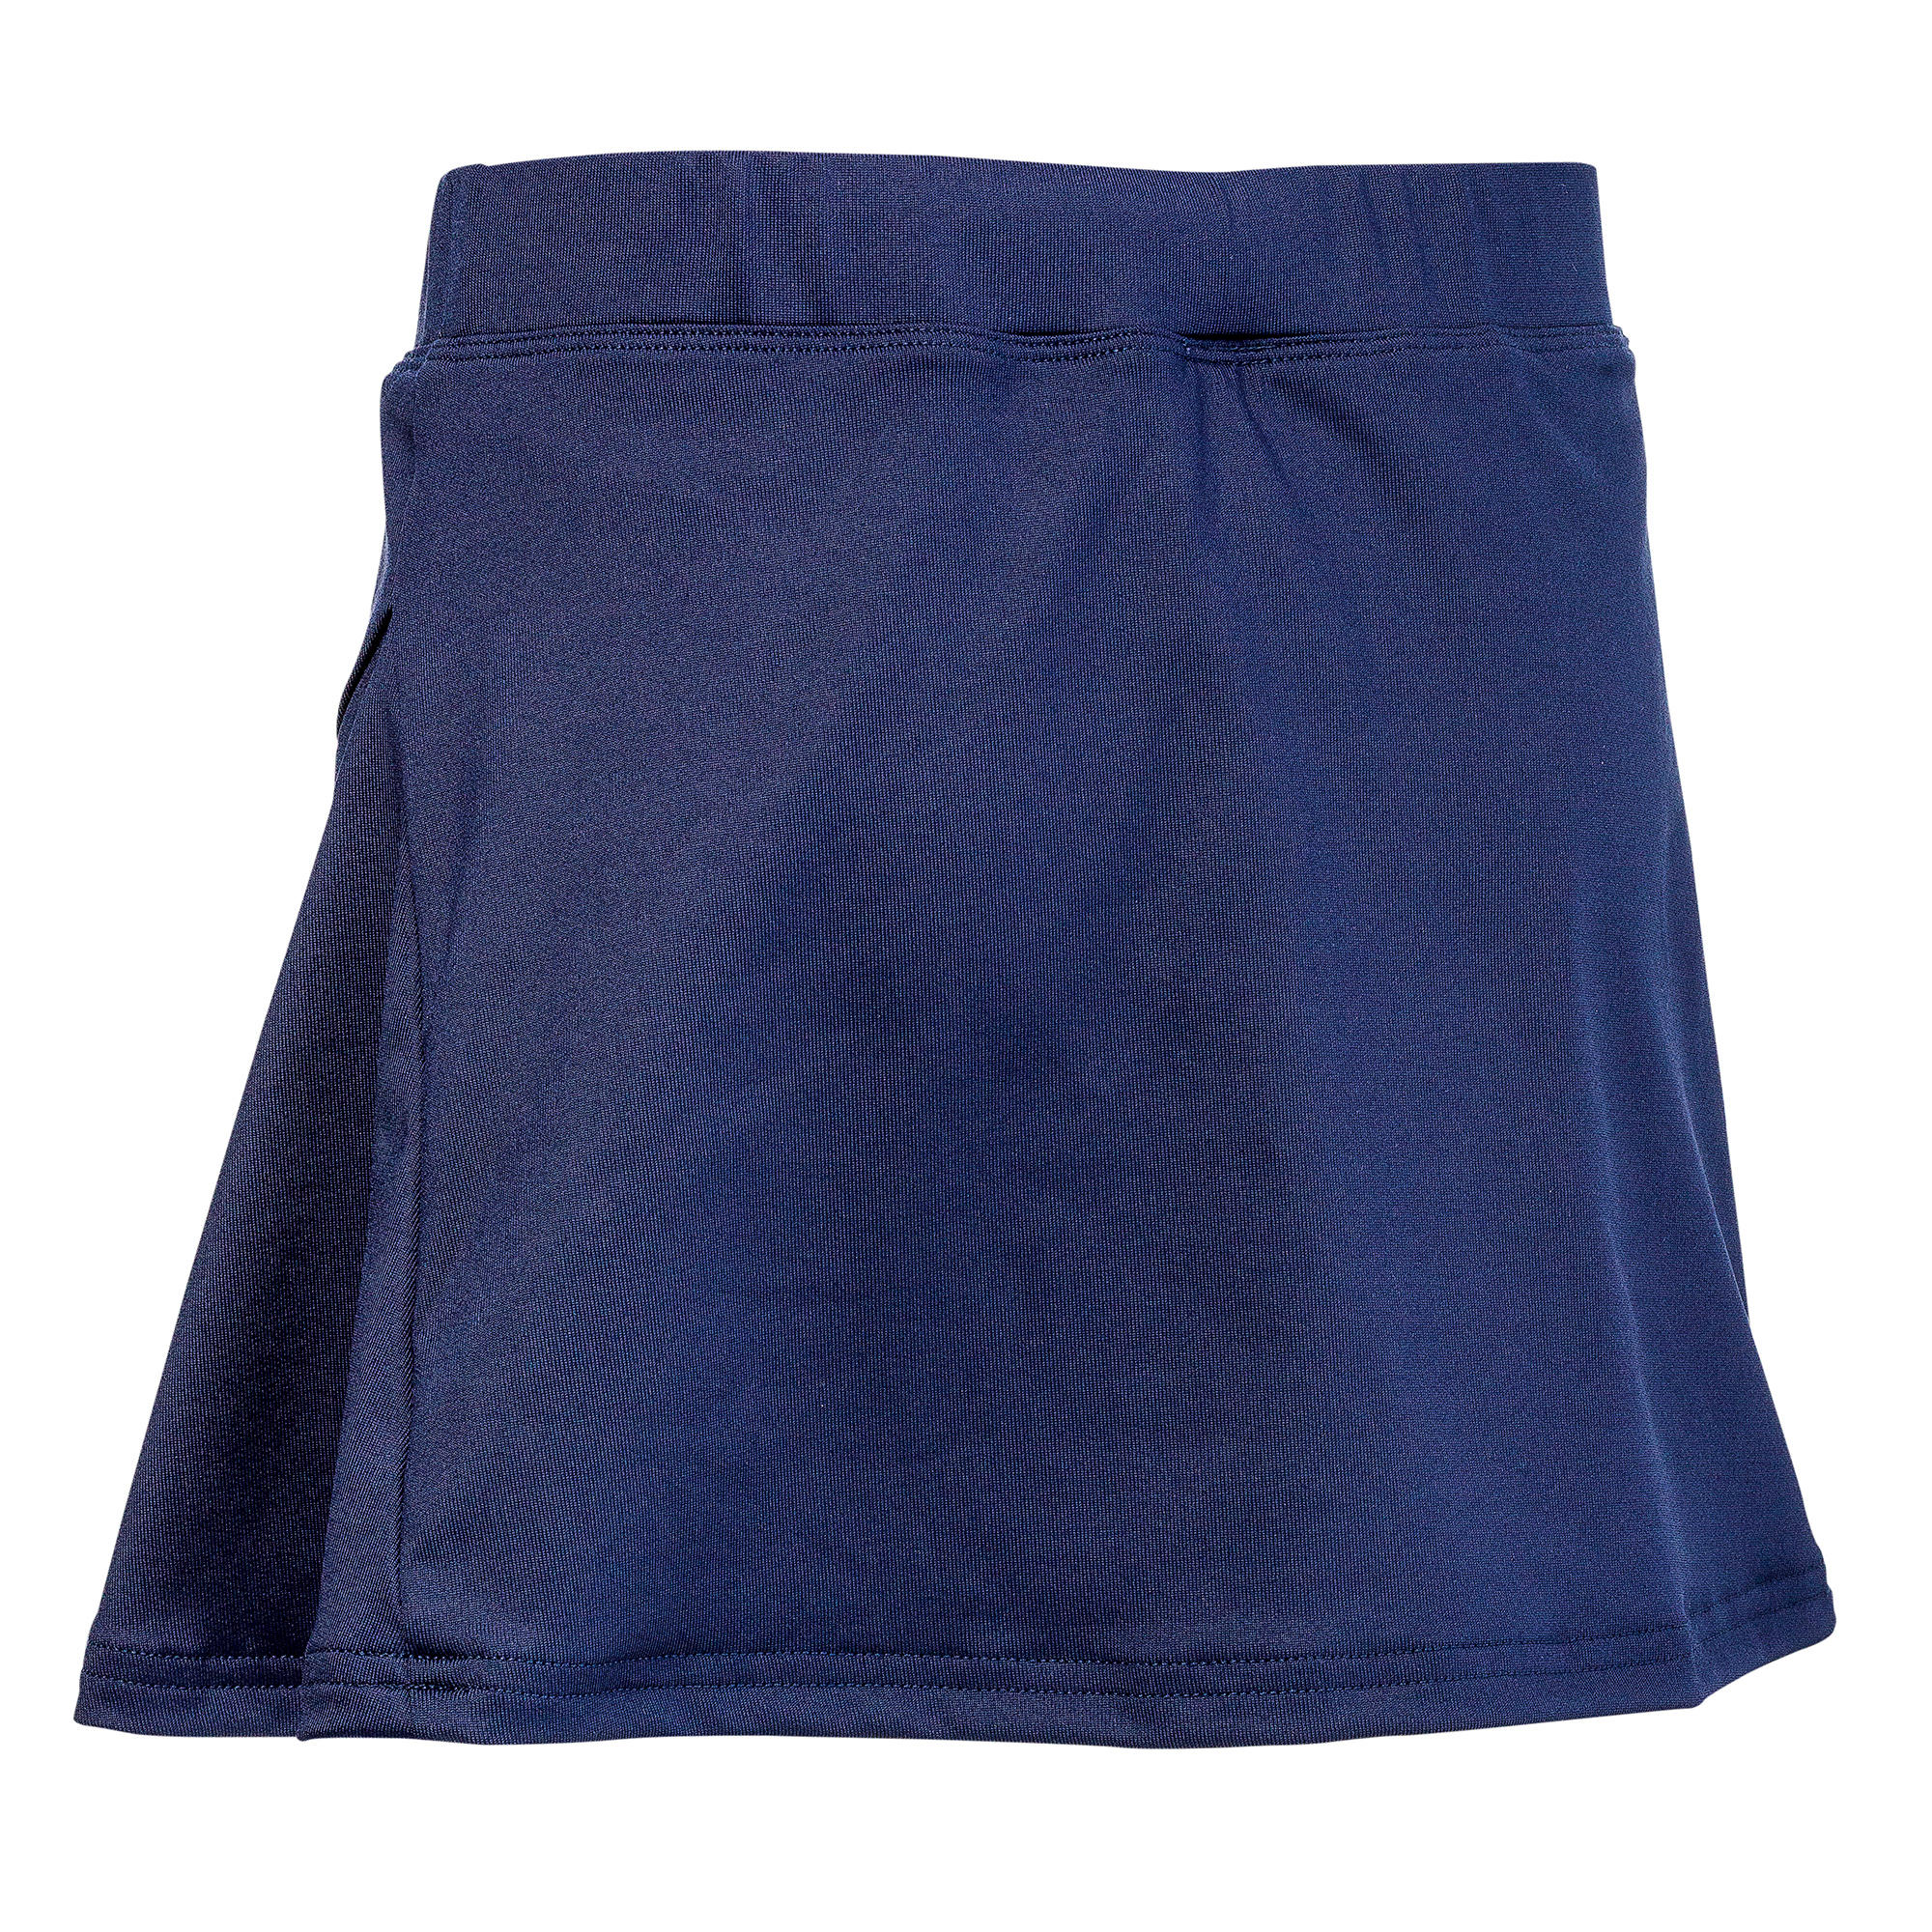 Girls' Field Hockey Skirt FH500 - Navy Blue 2/4